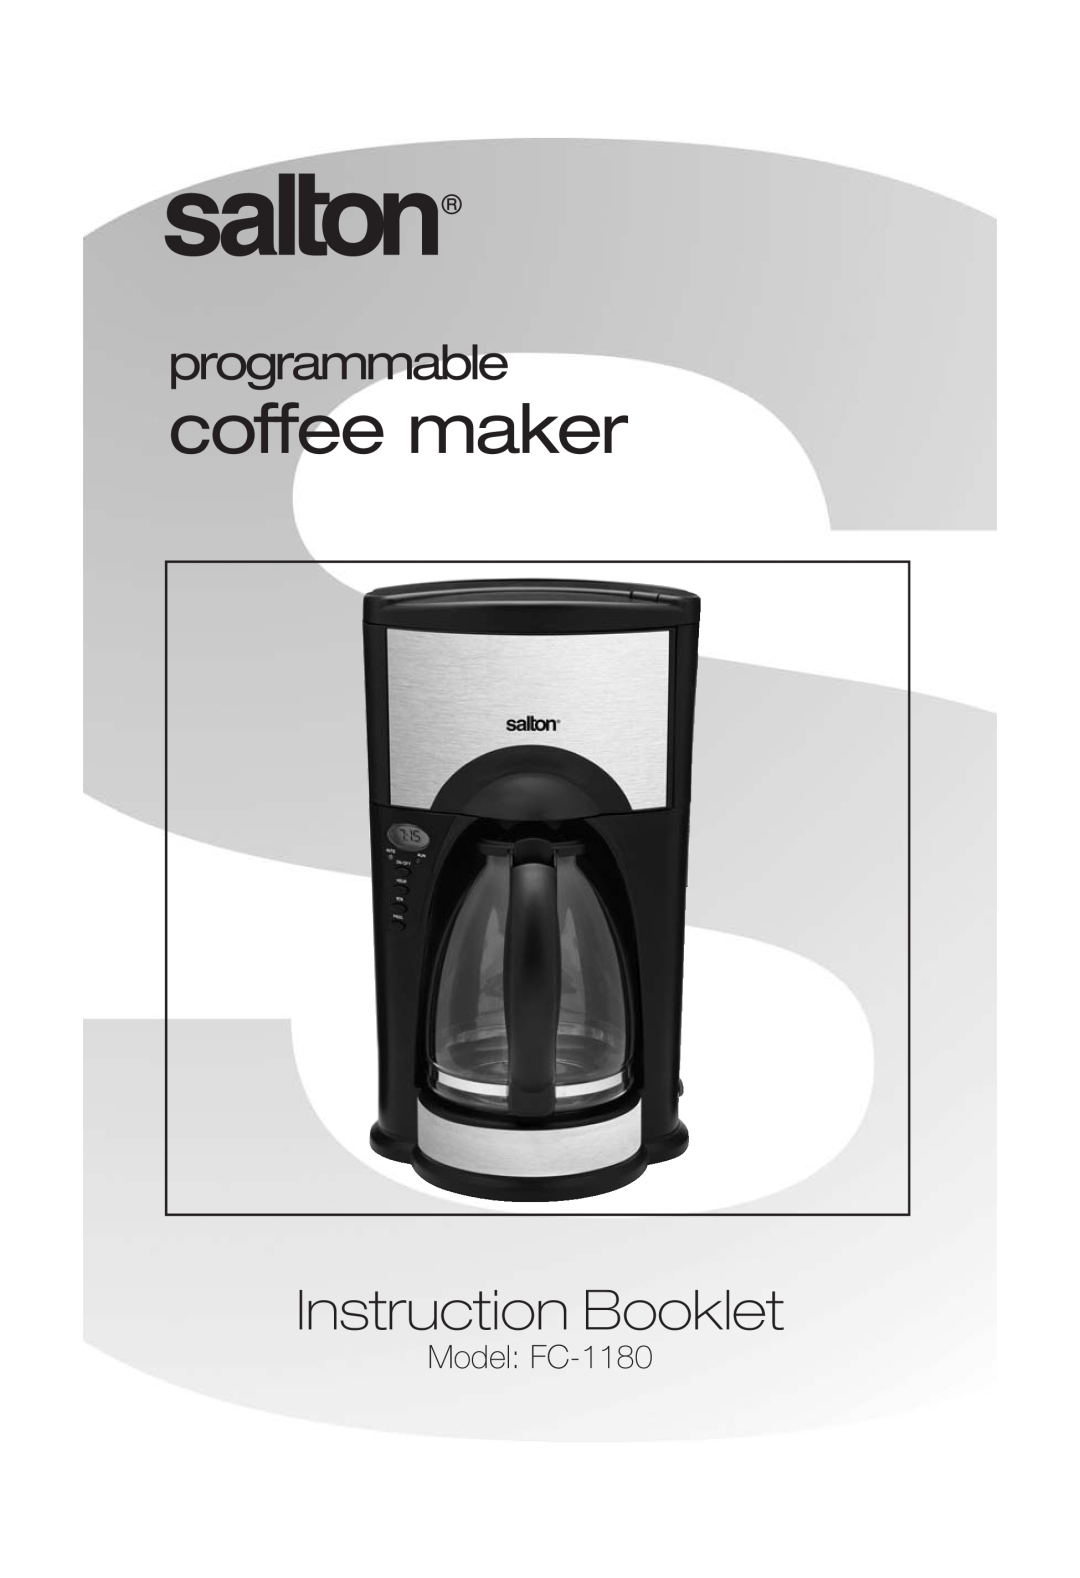 Salton manual coffee maker, Instruction Booklet, programmable, Model FC-1180 